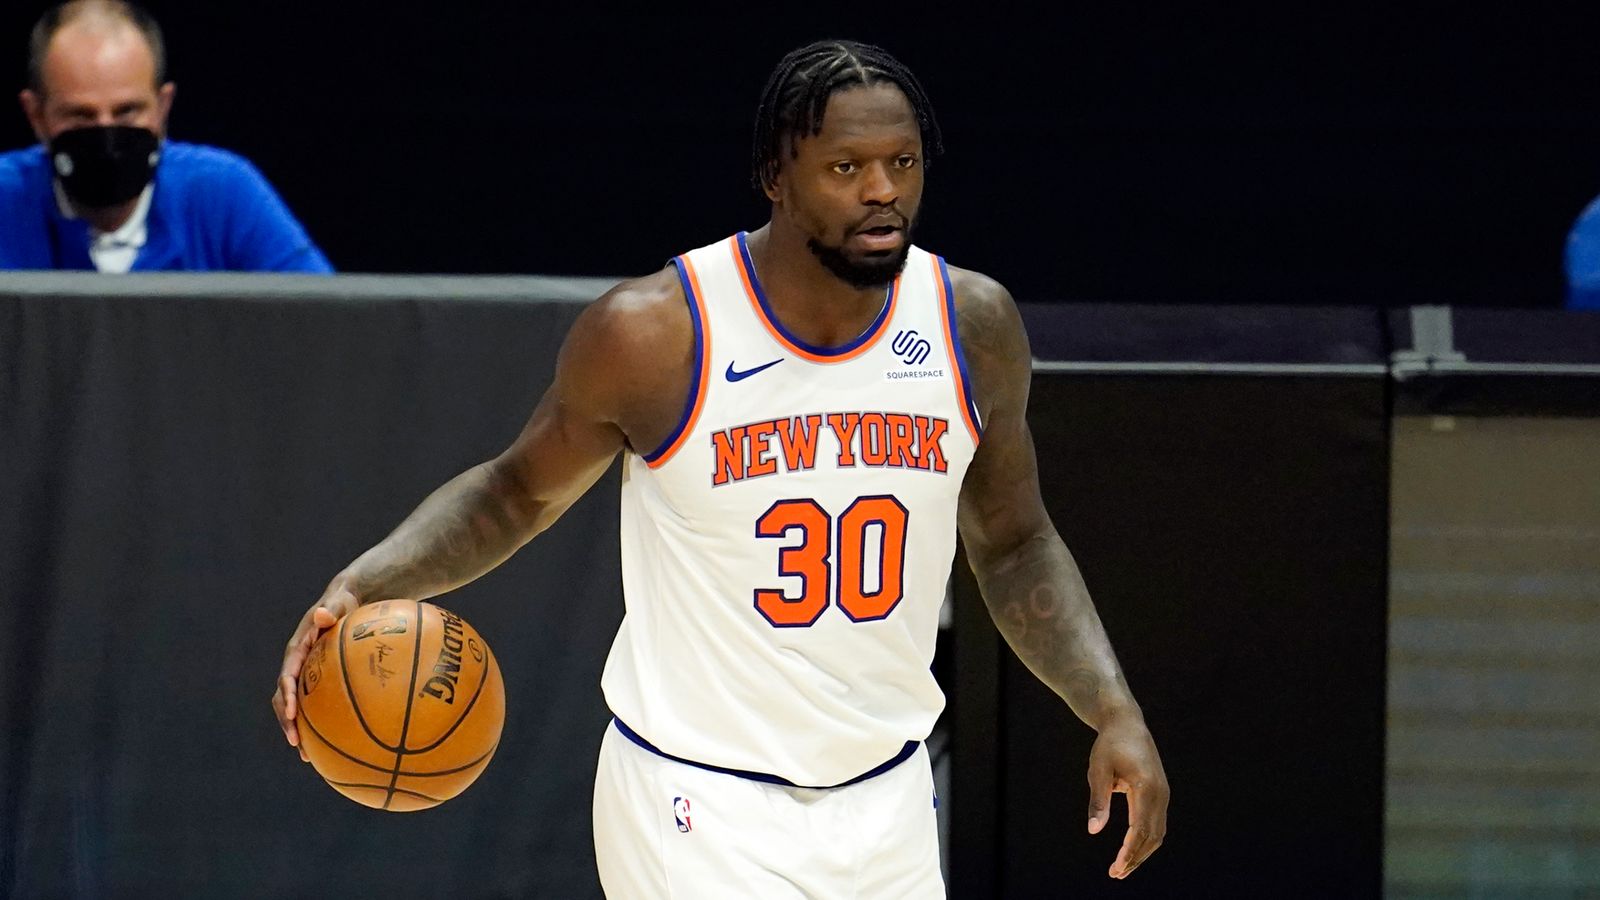 Reports: Lue on Knicks' short list